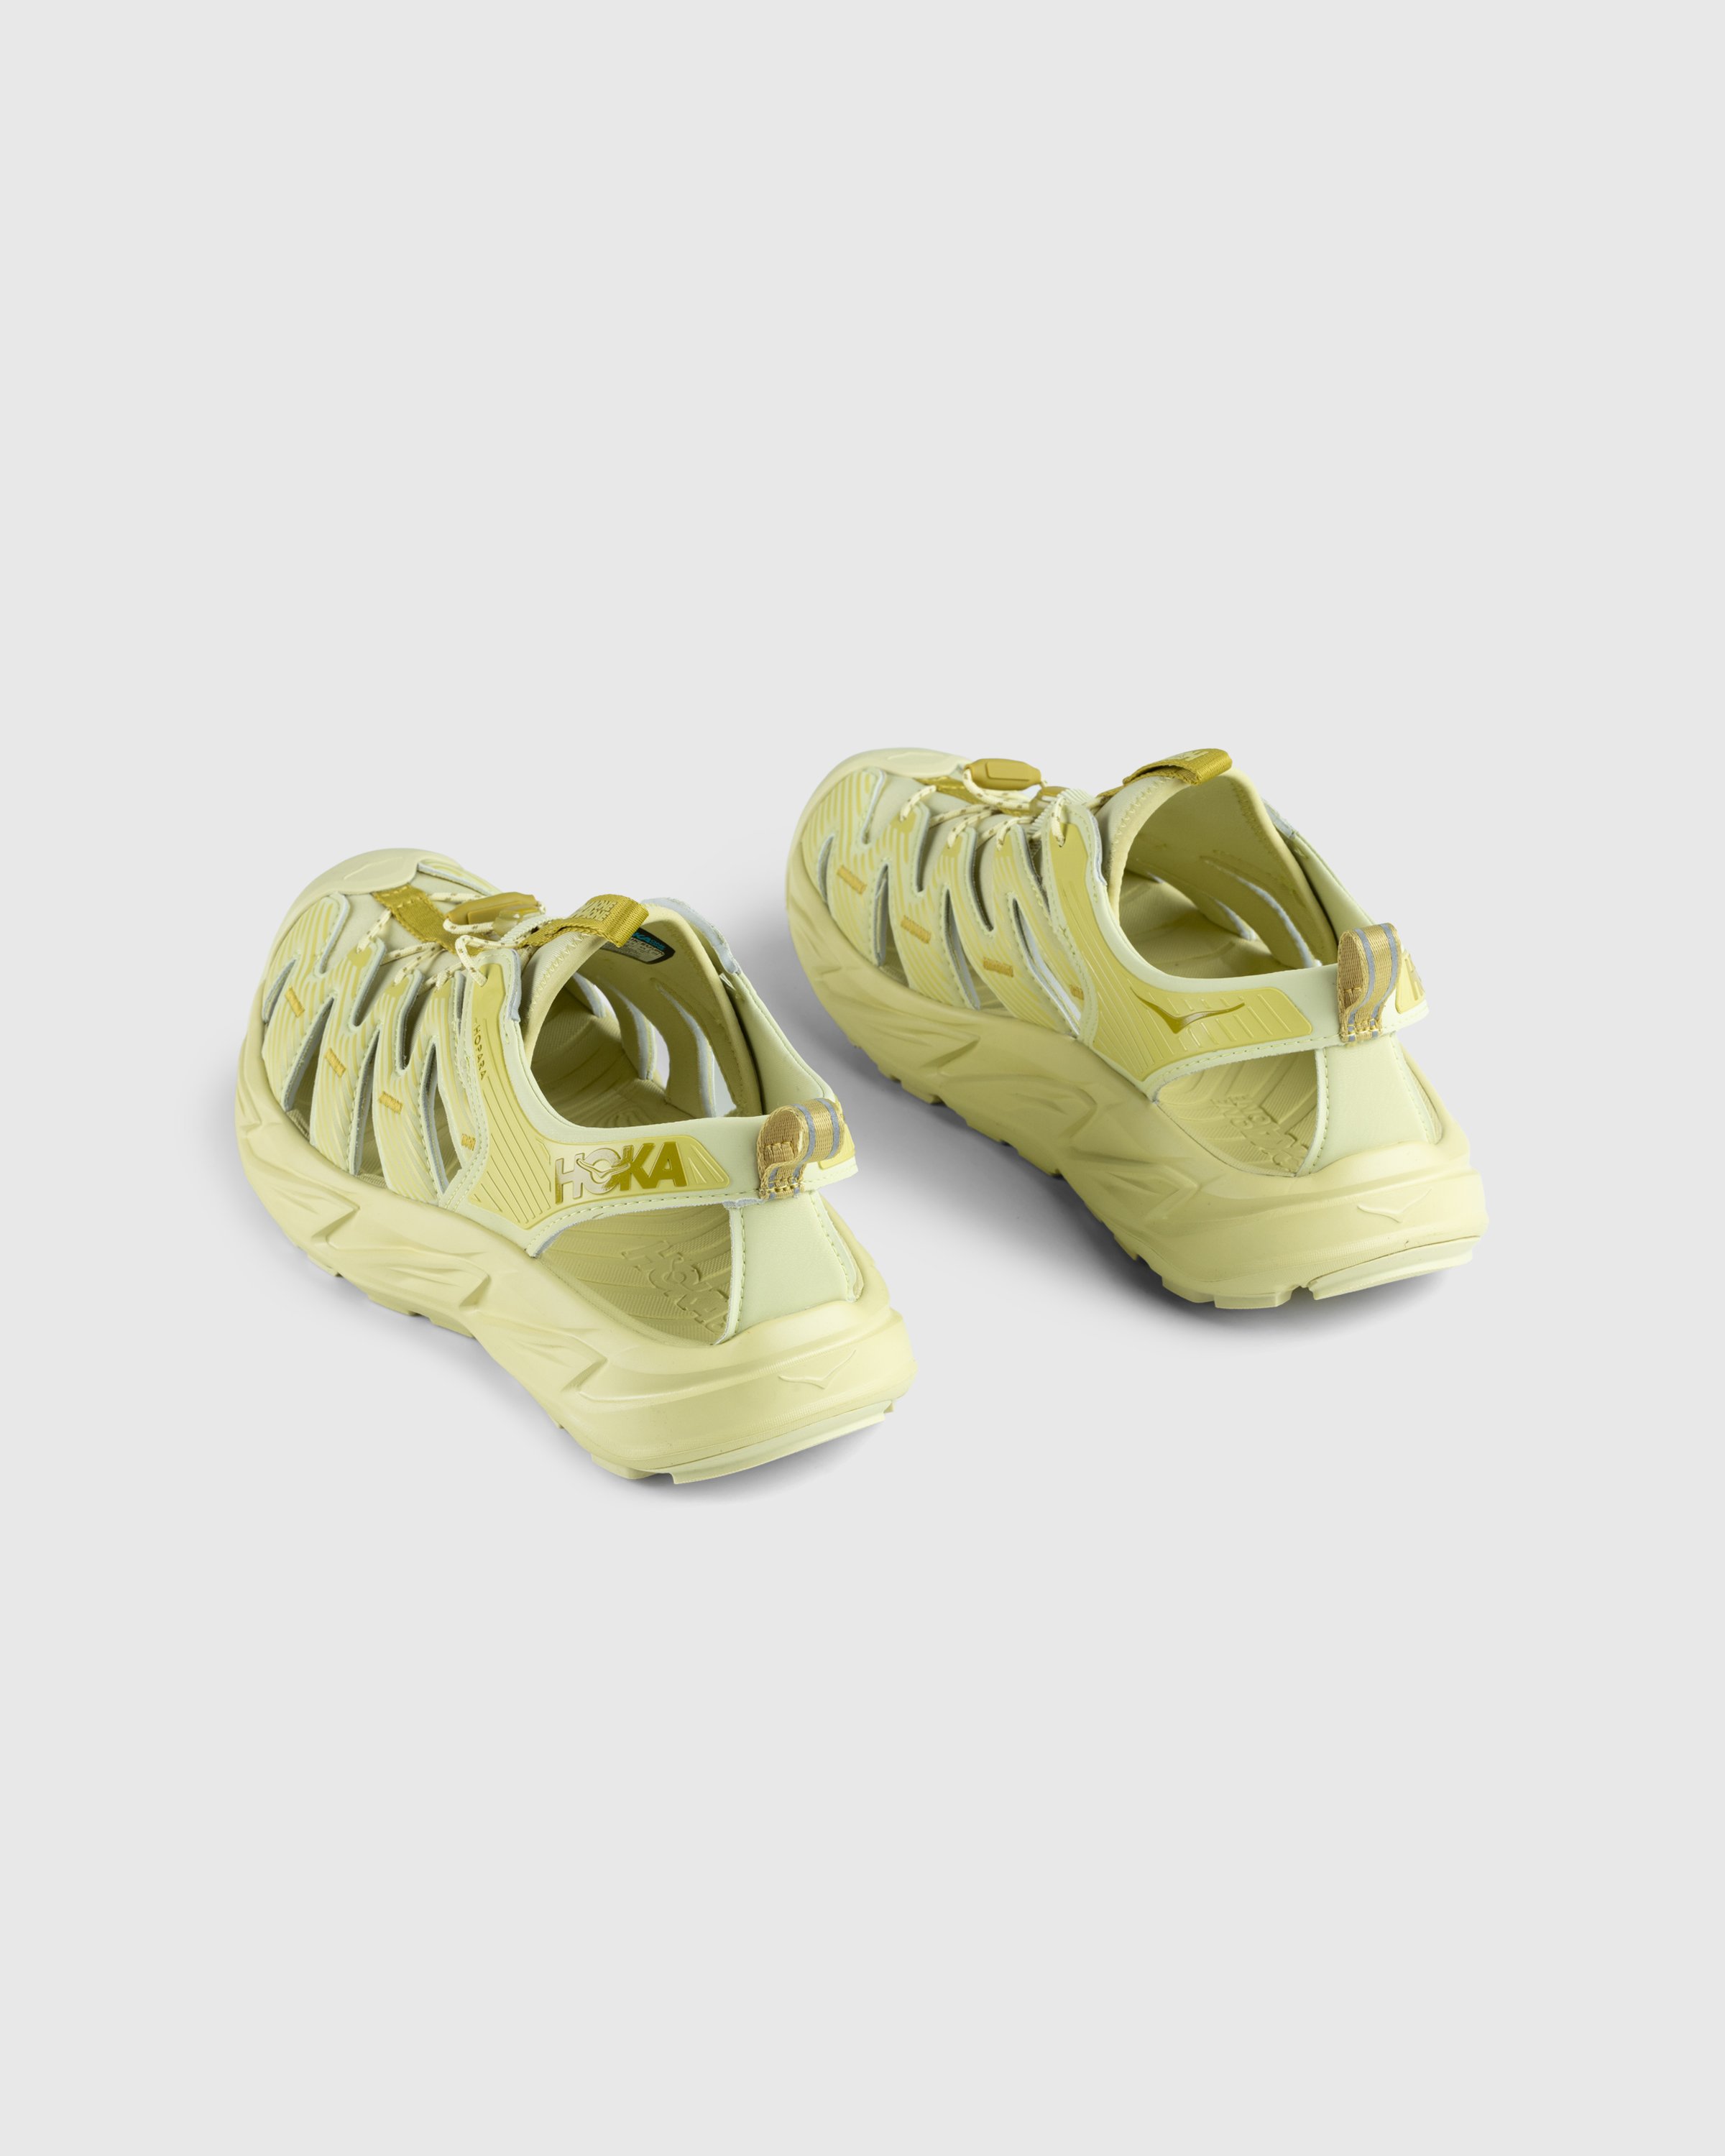 HOKA - Hopara Yellow - Footwear - Yellow - Image 4